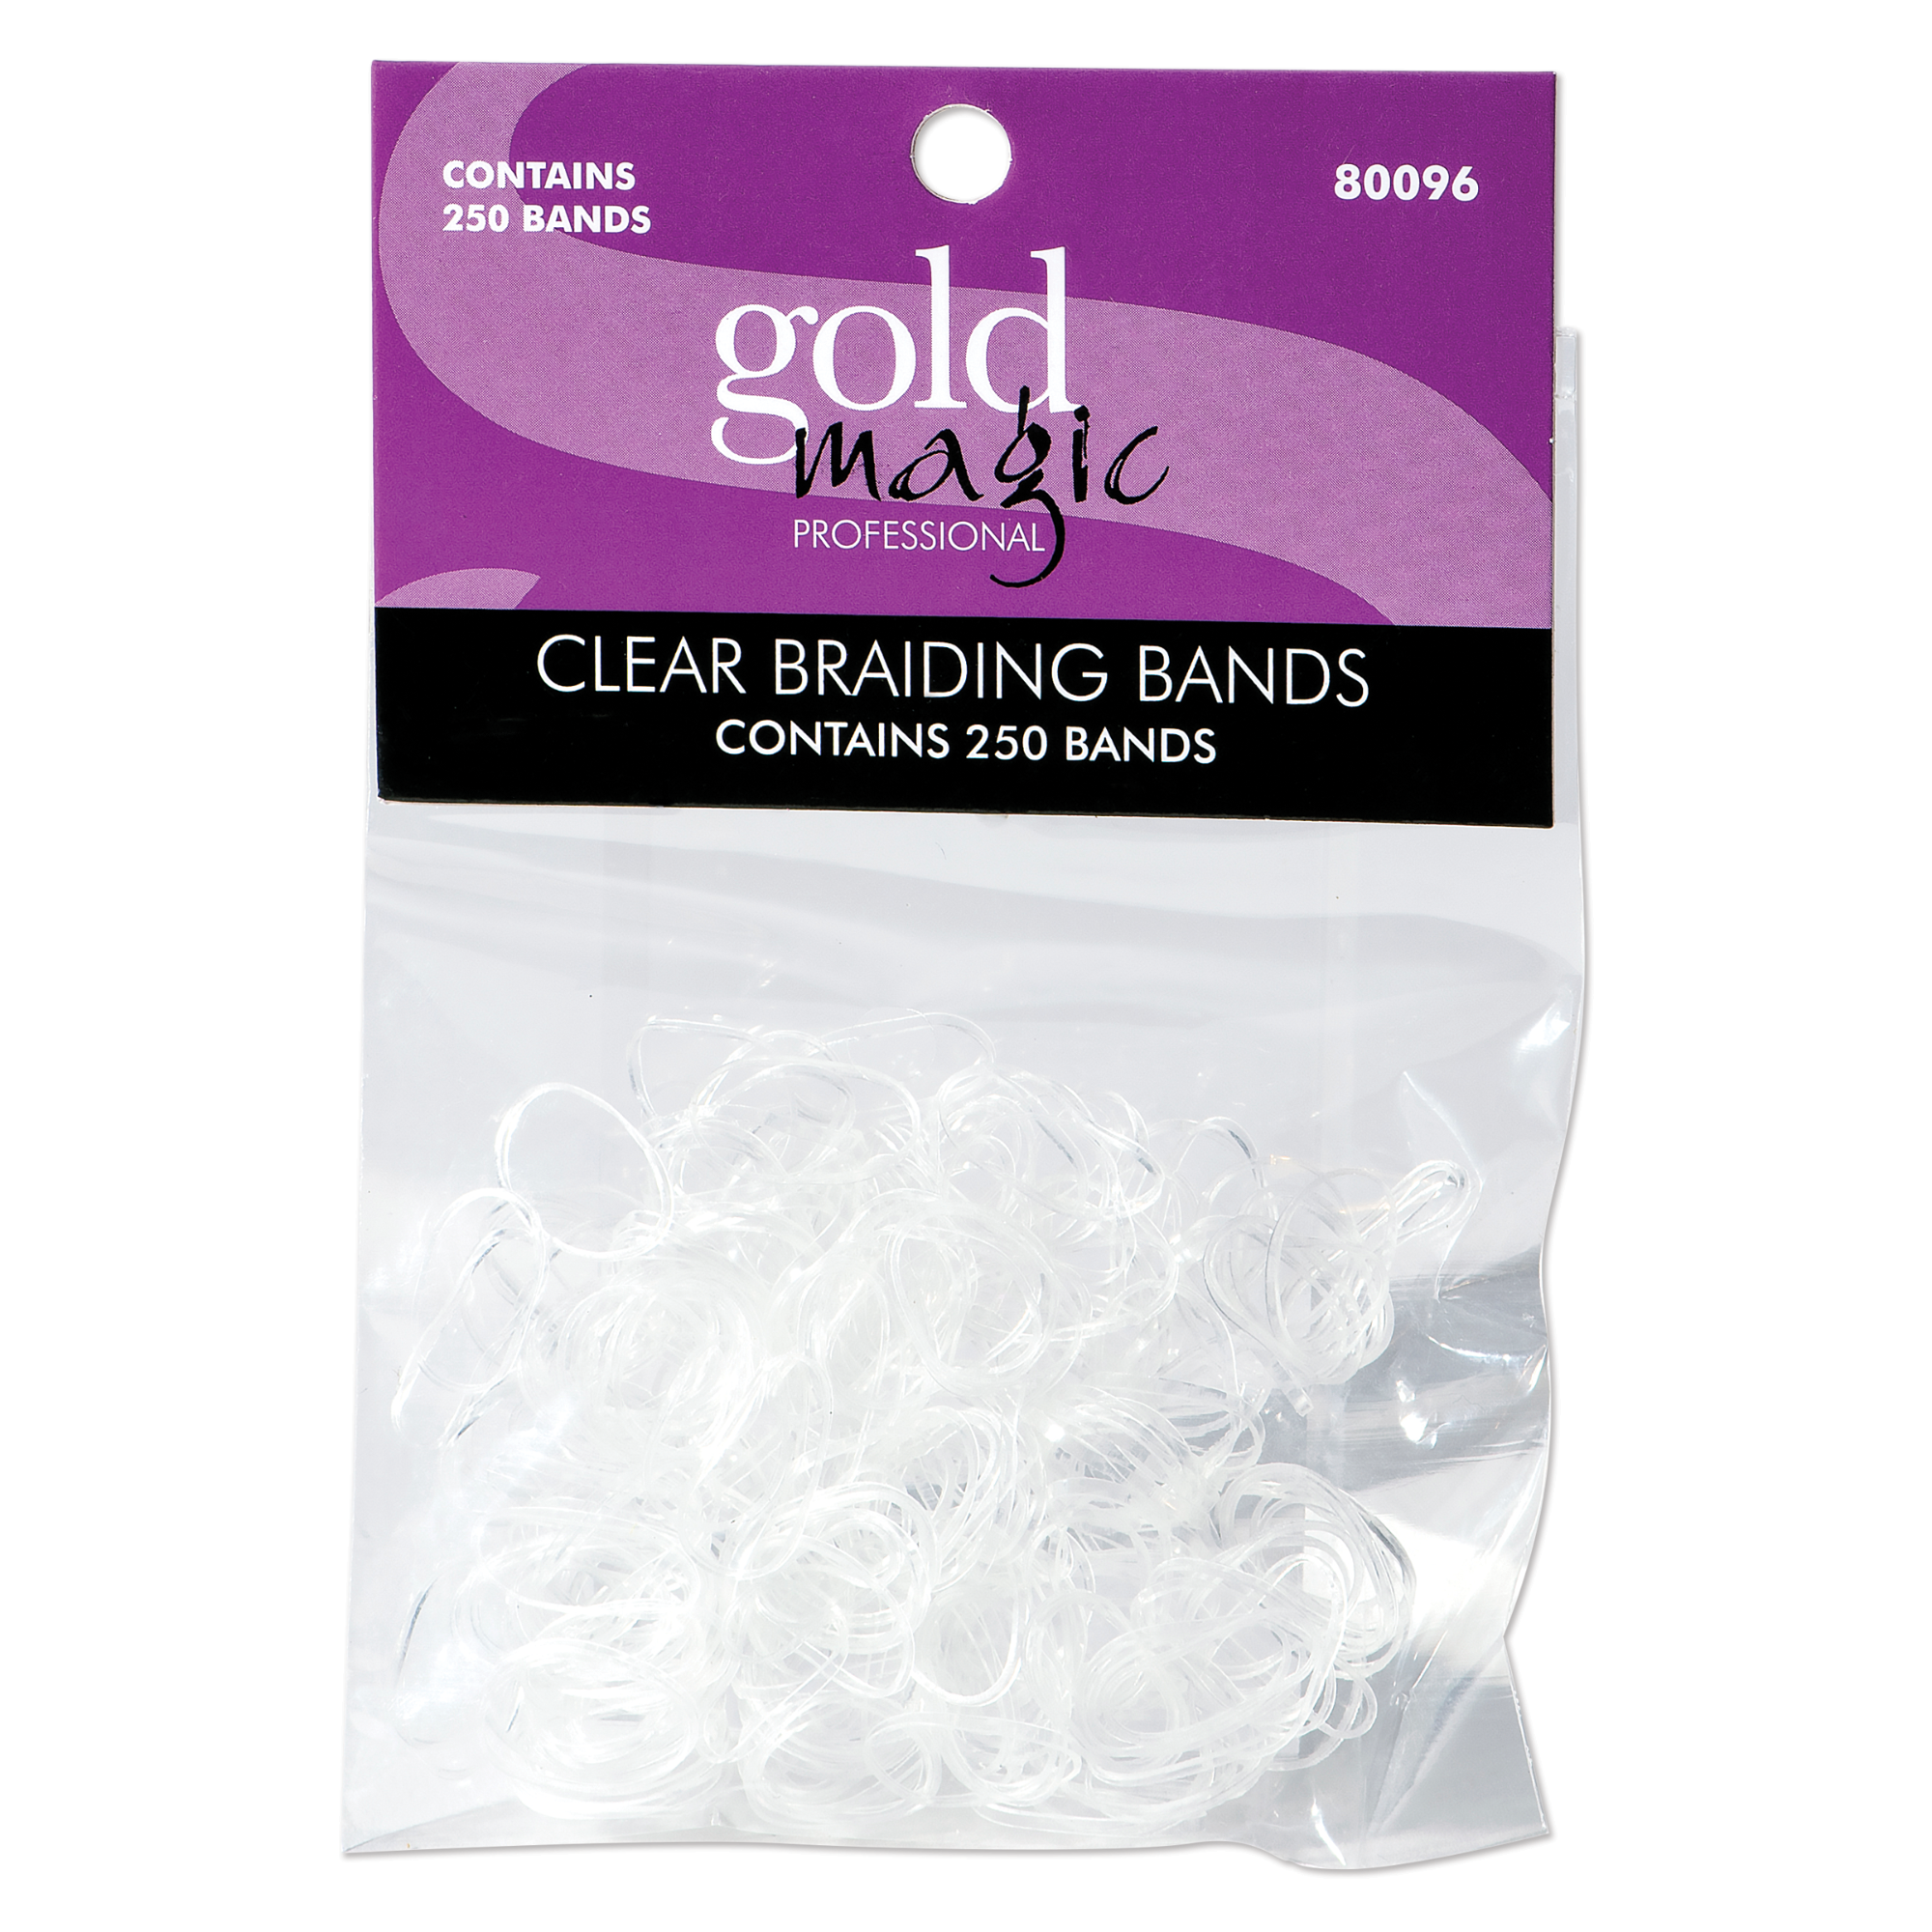 Clear Braiding Bands